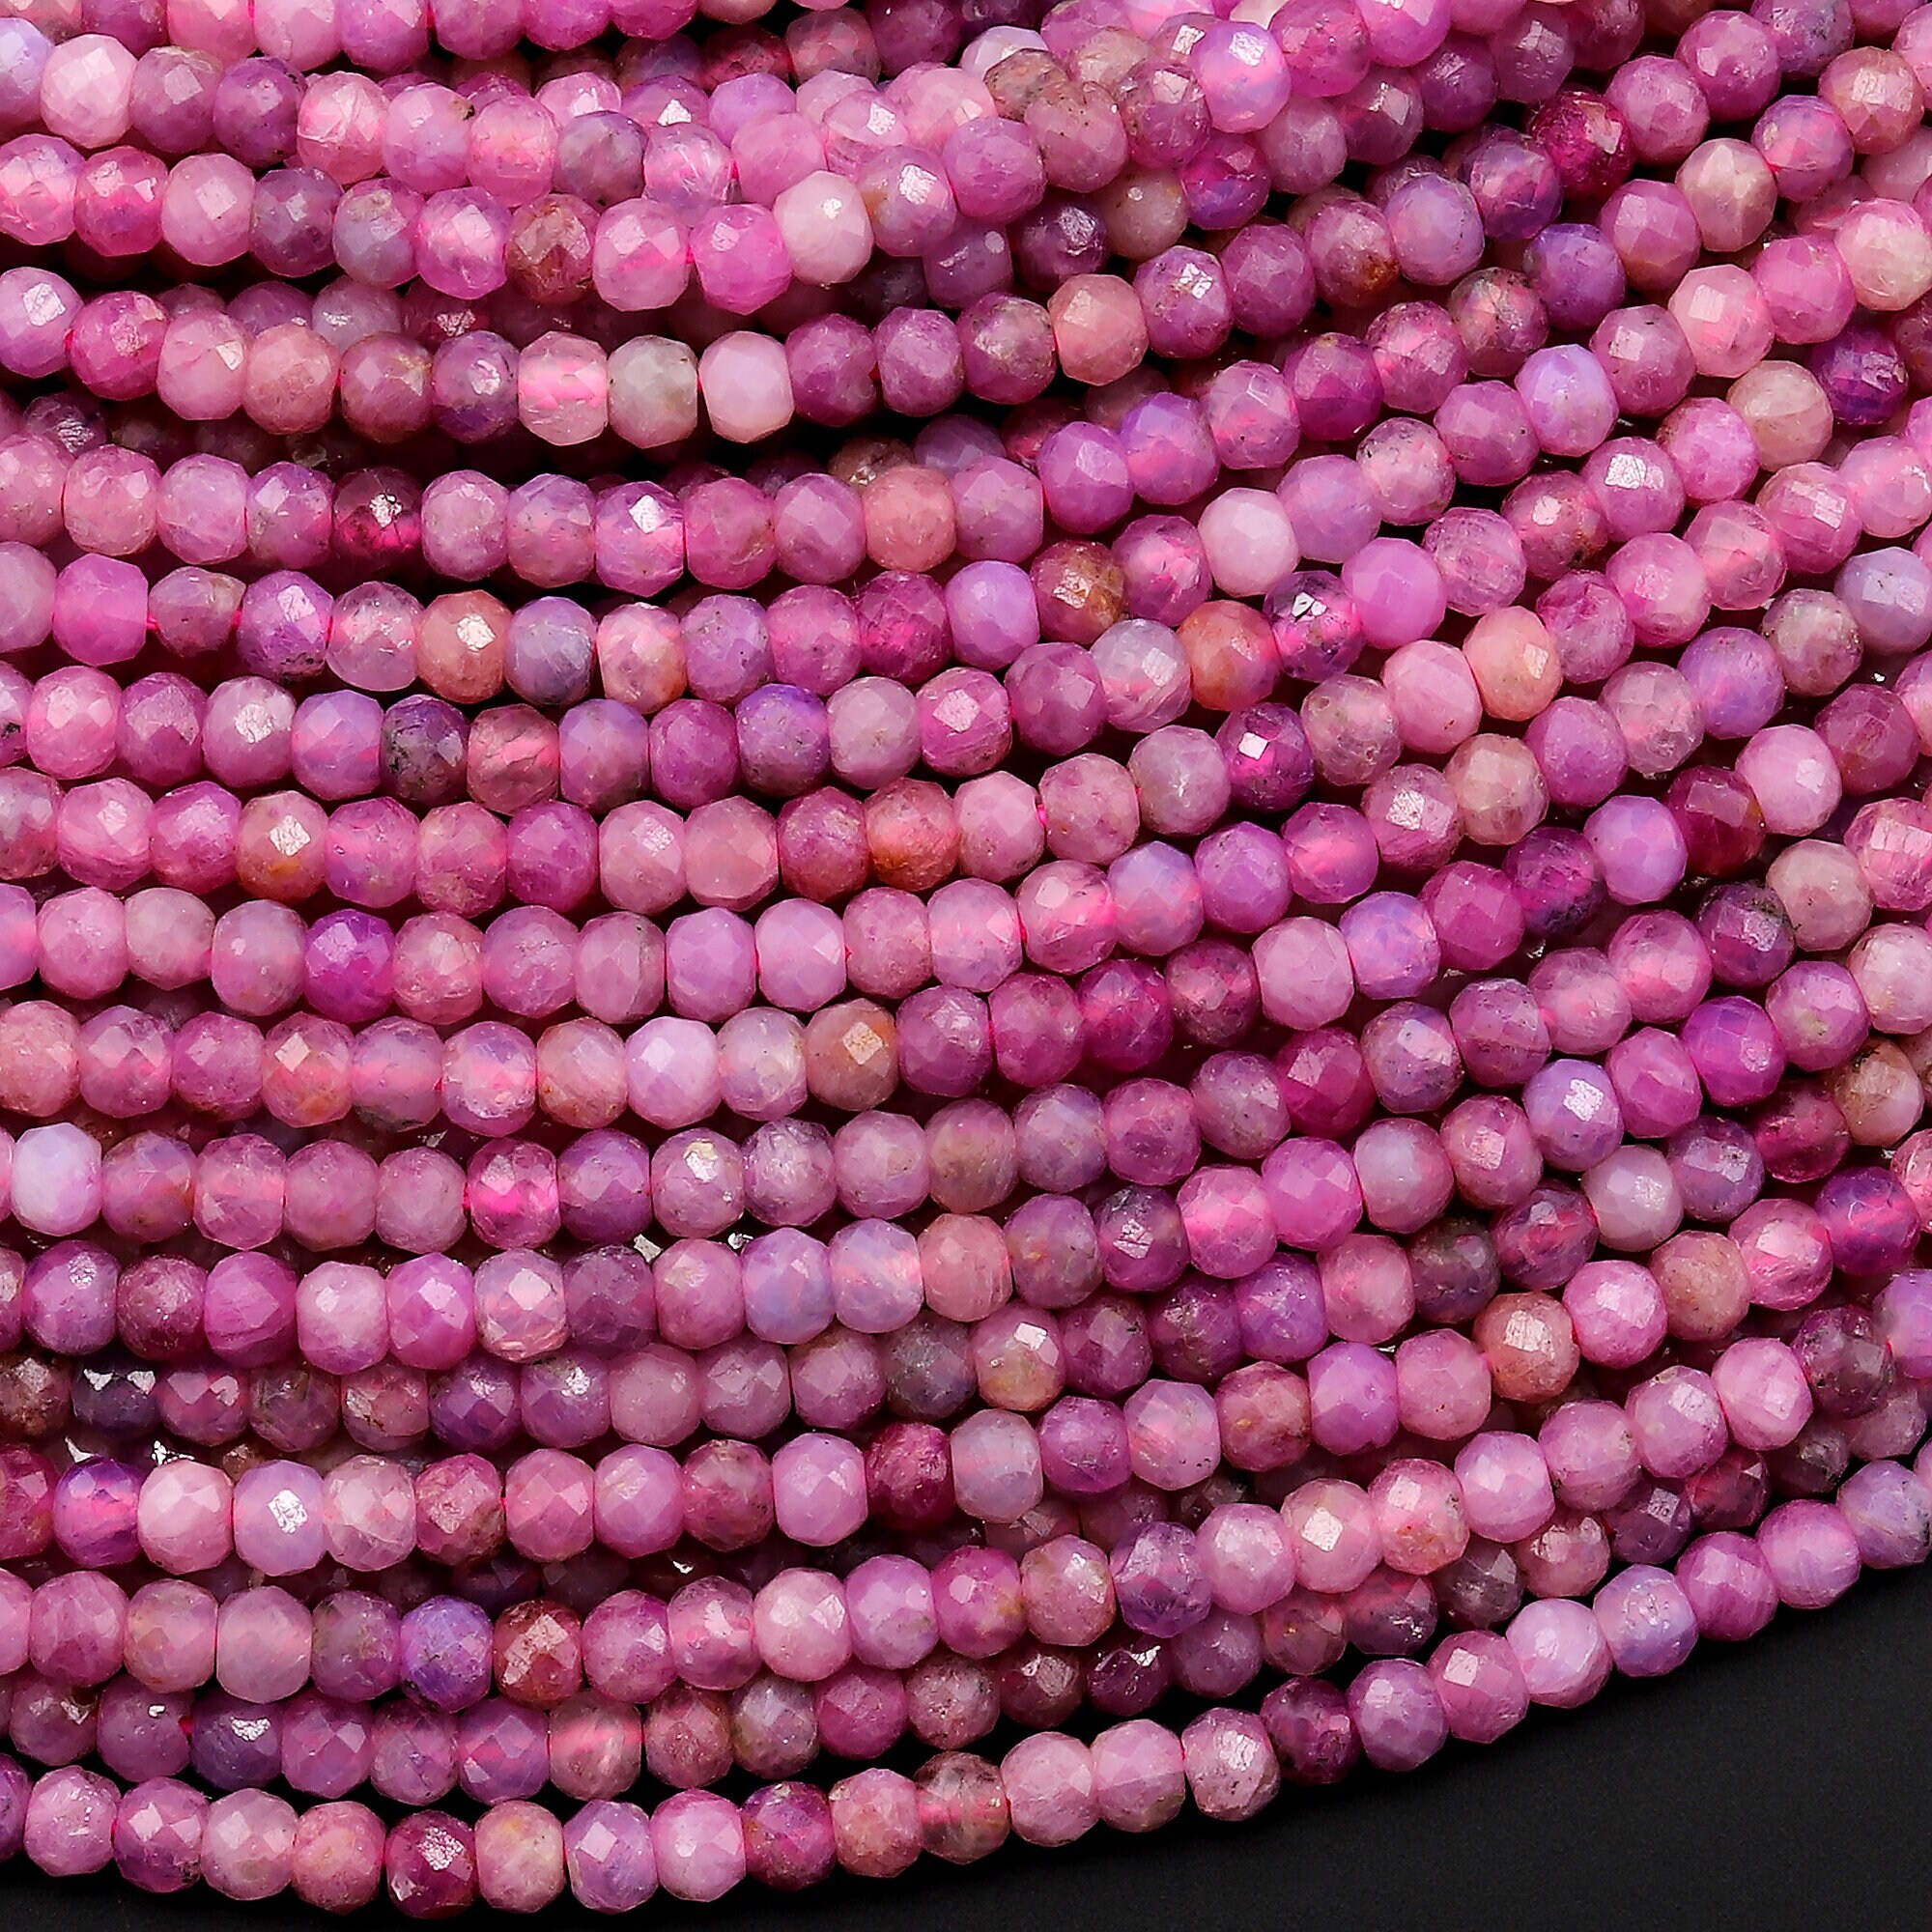 Three Strand Japan Necklace of Decorative Beads - Ruby Lane